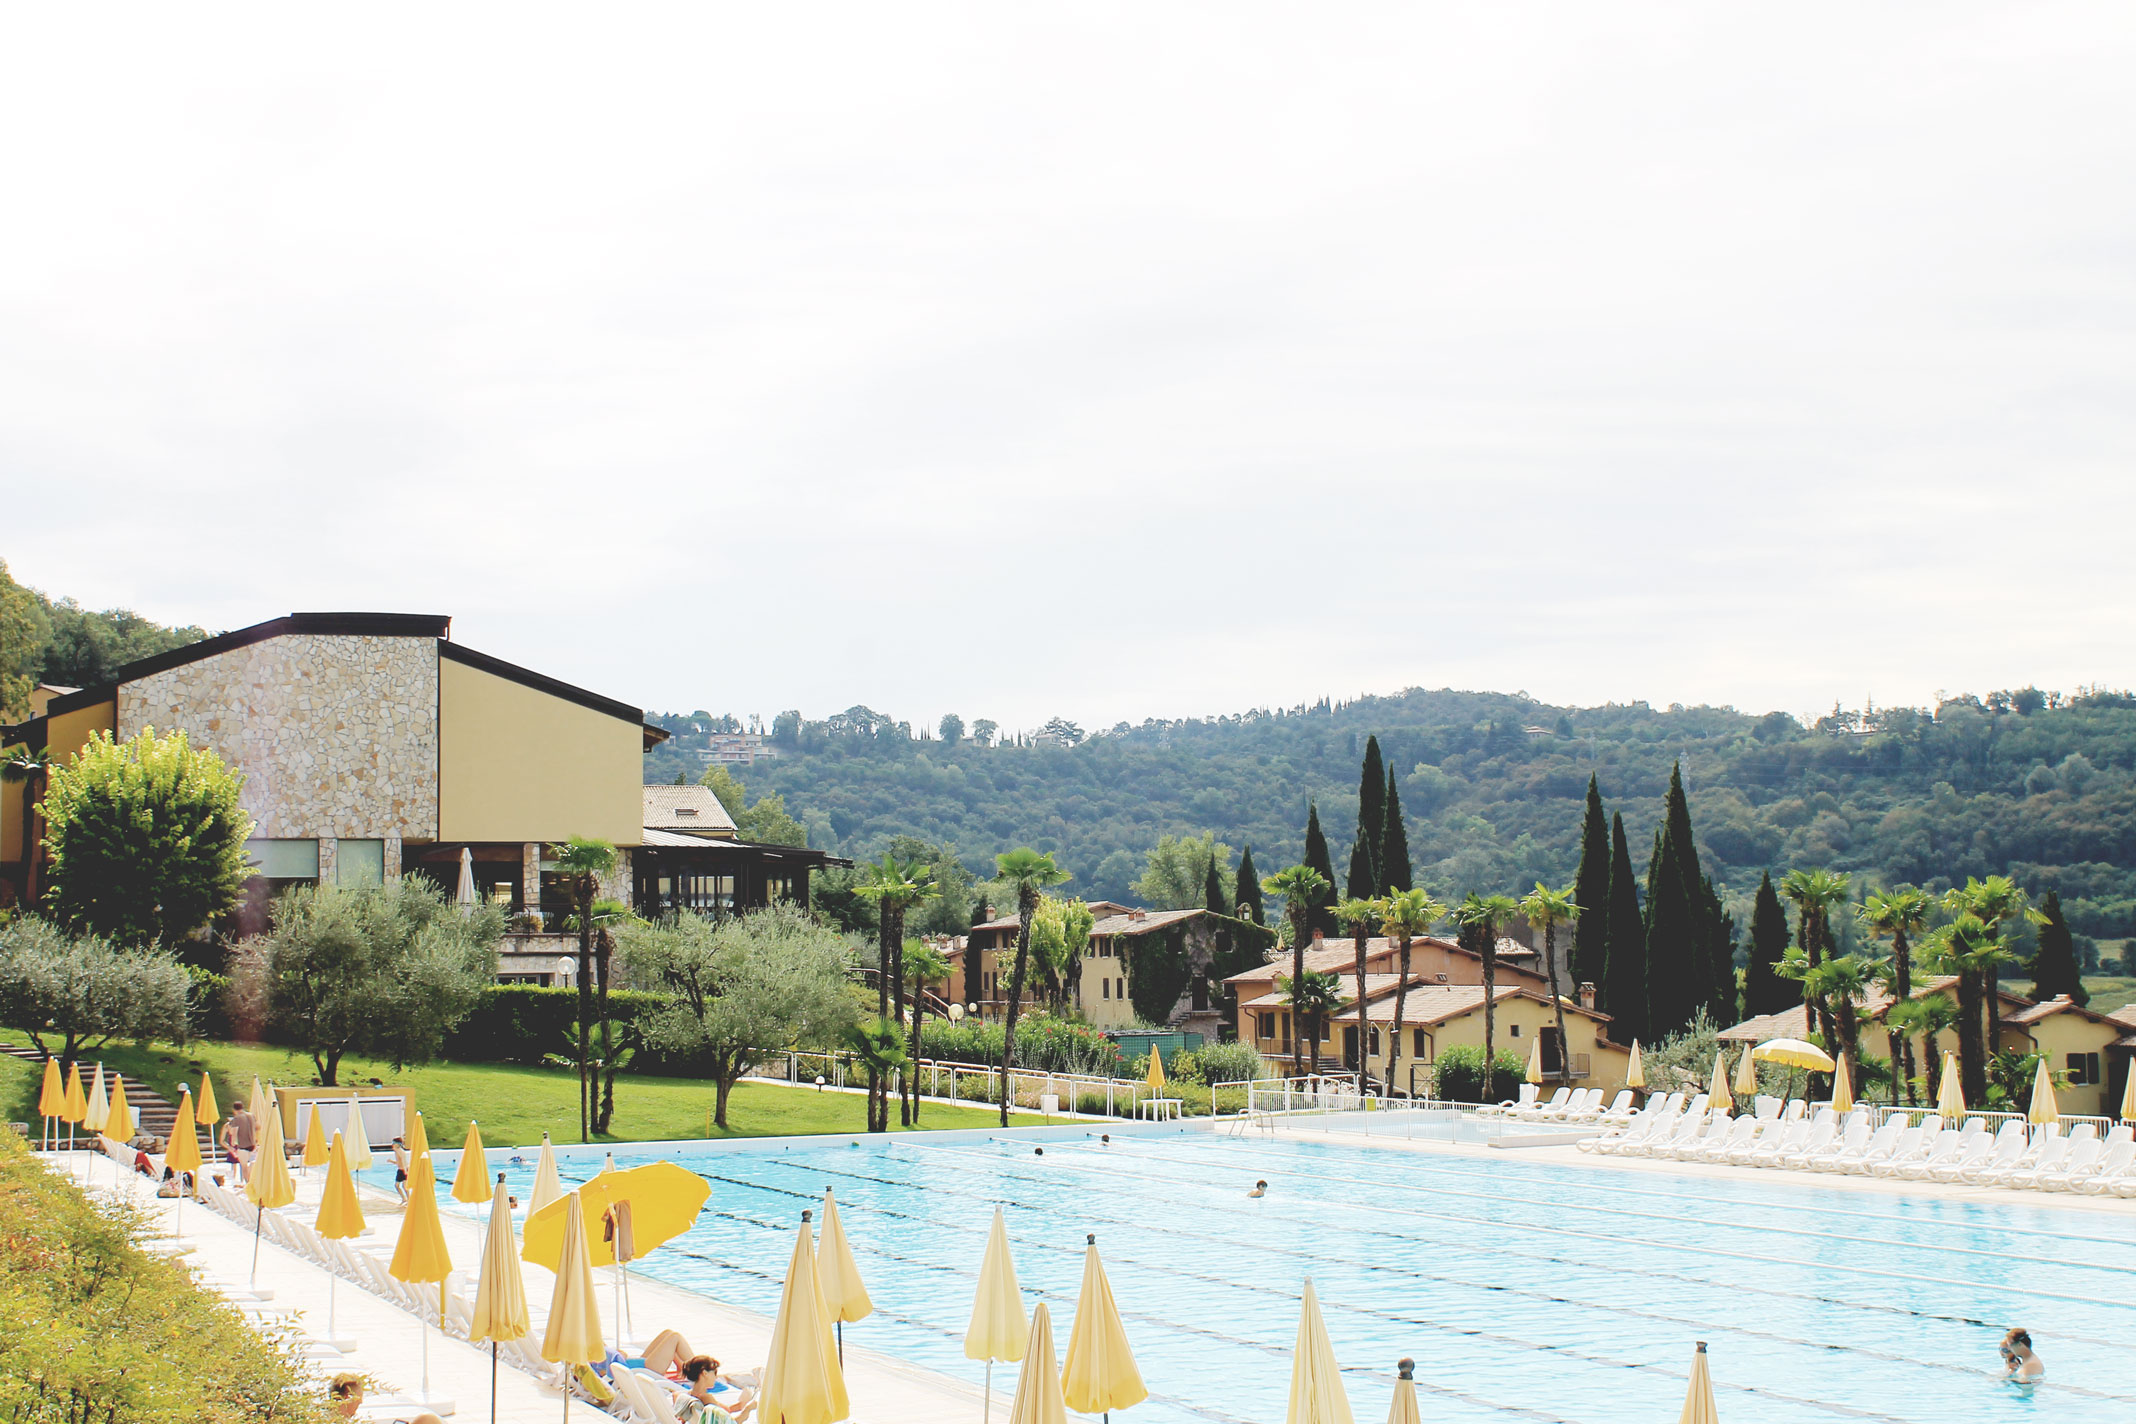 Styleat30 Travel Blog - Poiano Resort Hotel Review - Lake Garda Holiday - Italy Travel Guide 32